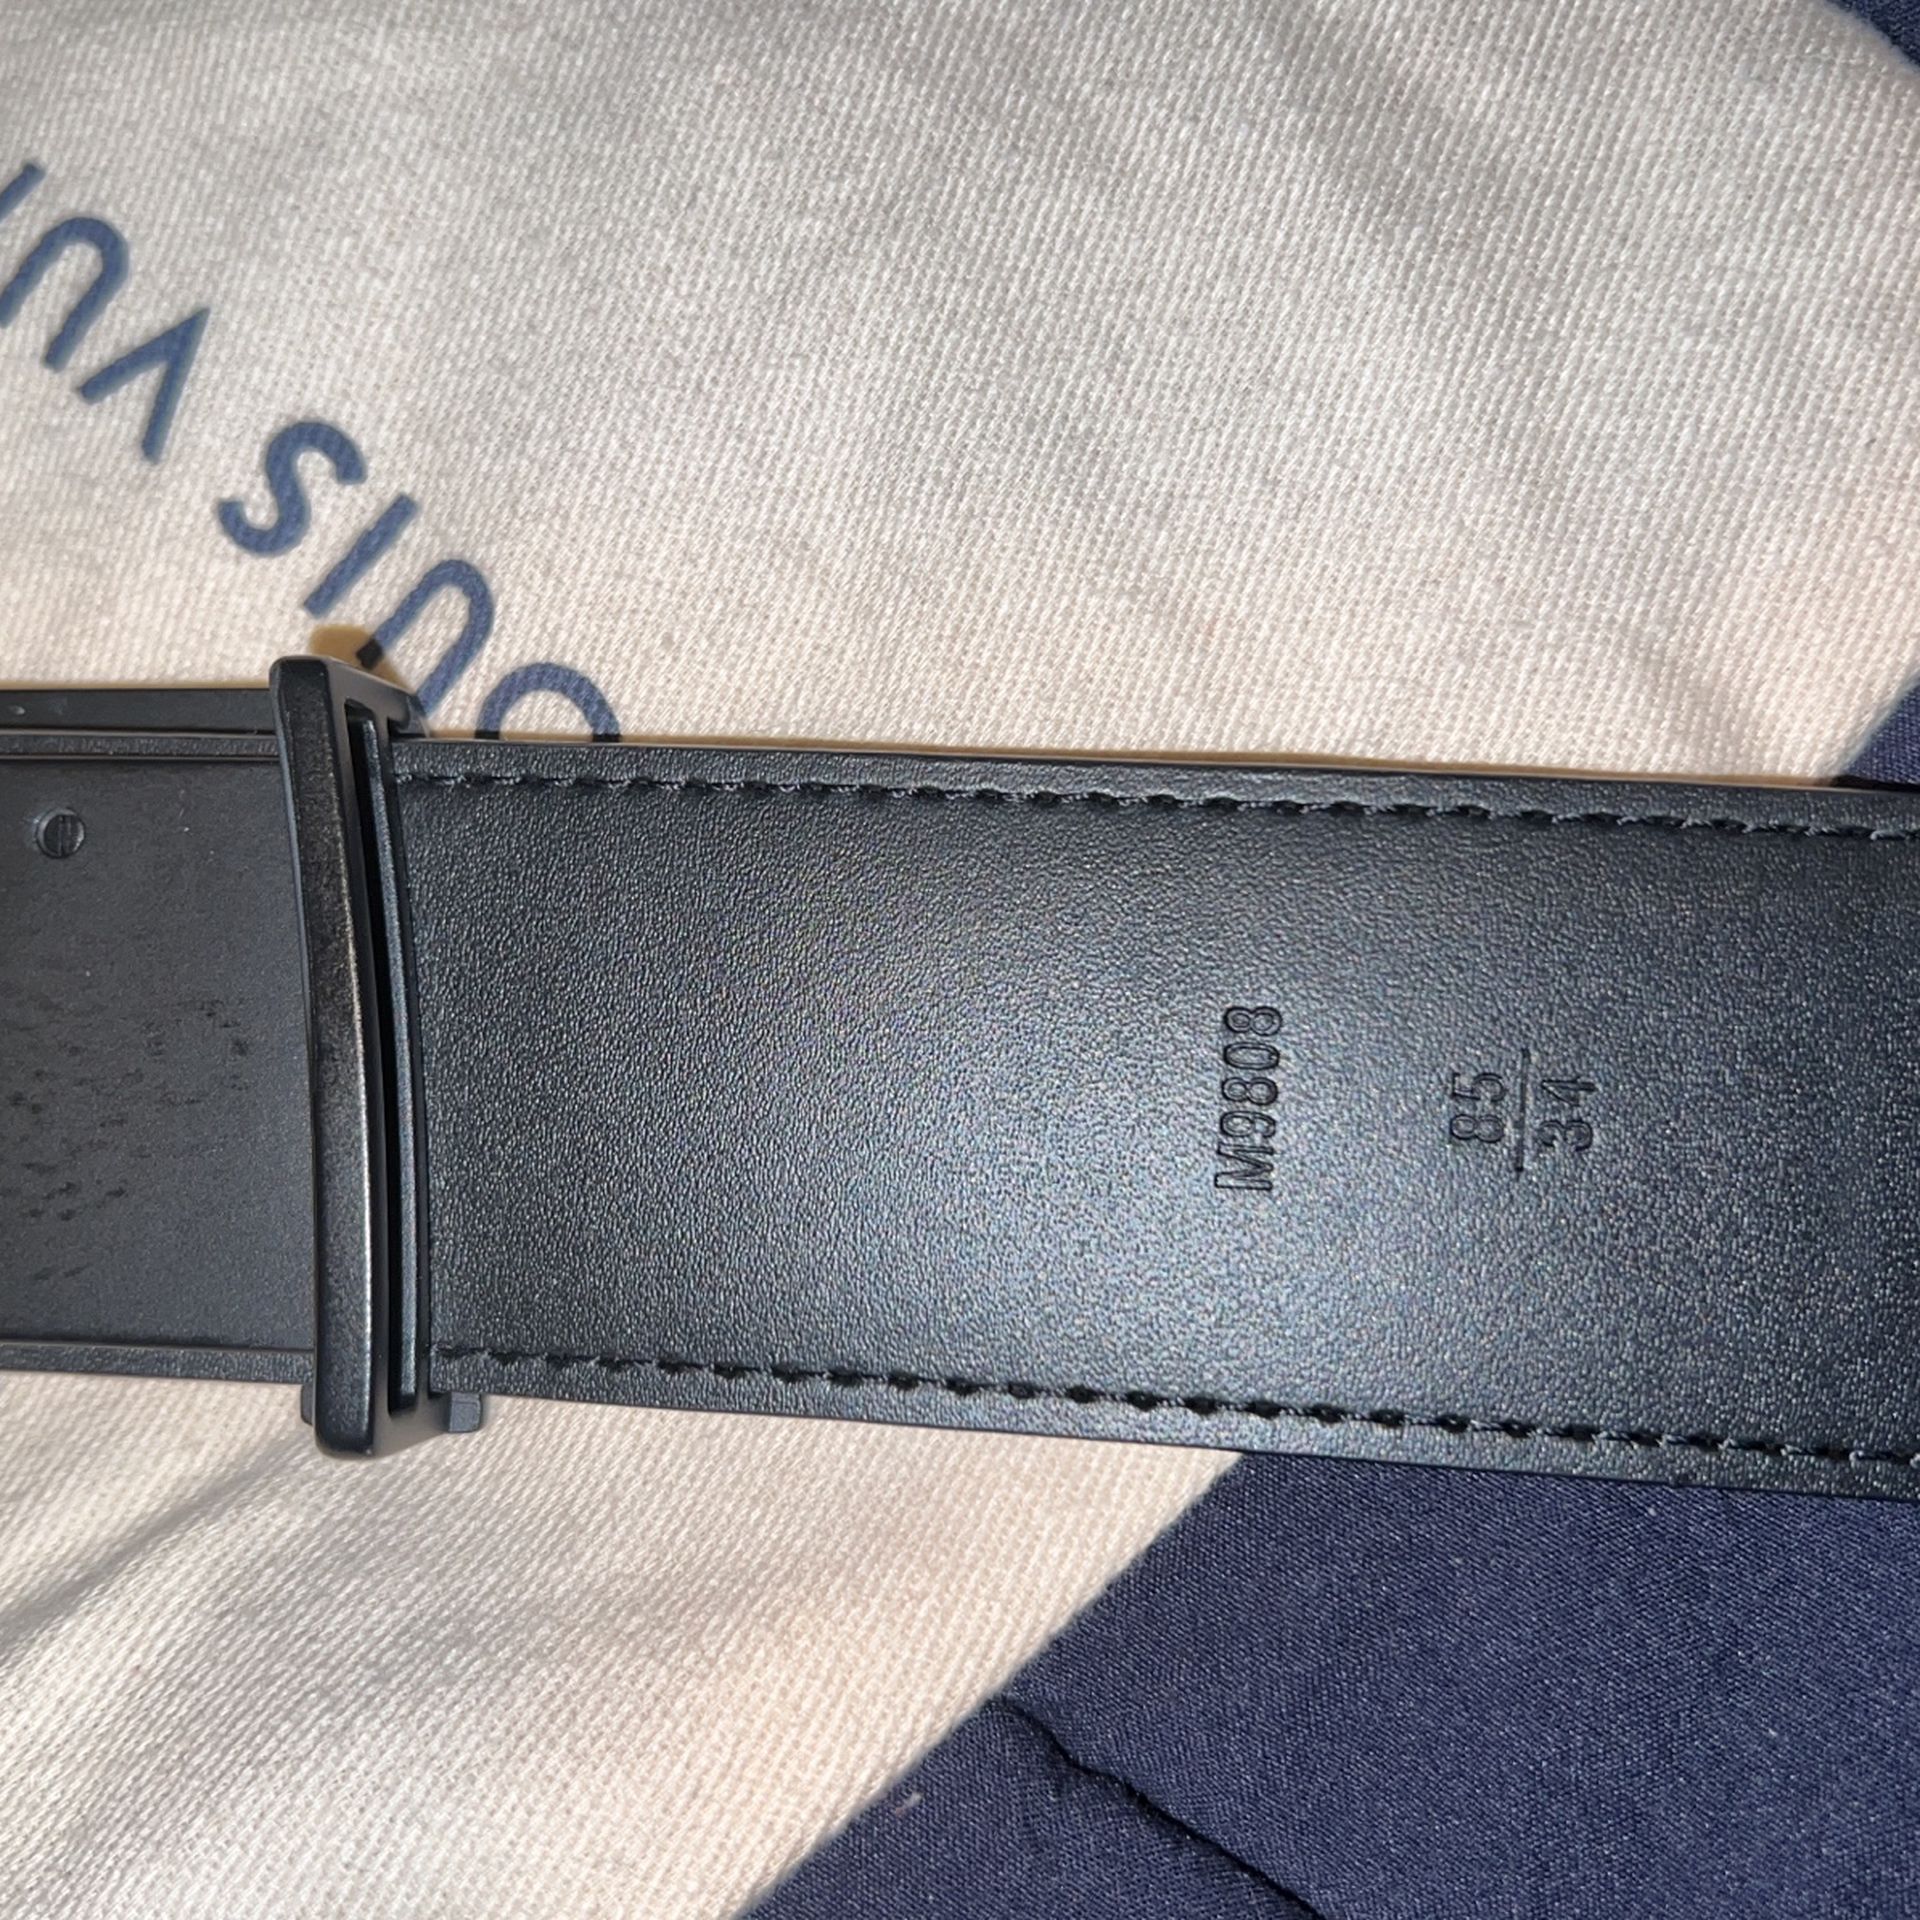 85/34 Louis Vuitton belt for Sale in Ypsilanti, MI - OfferUp